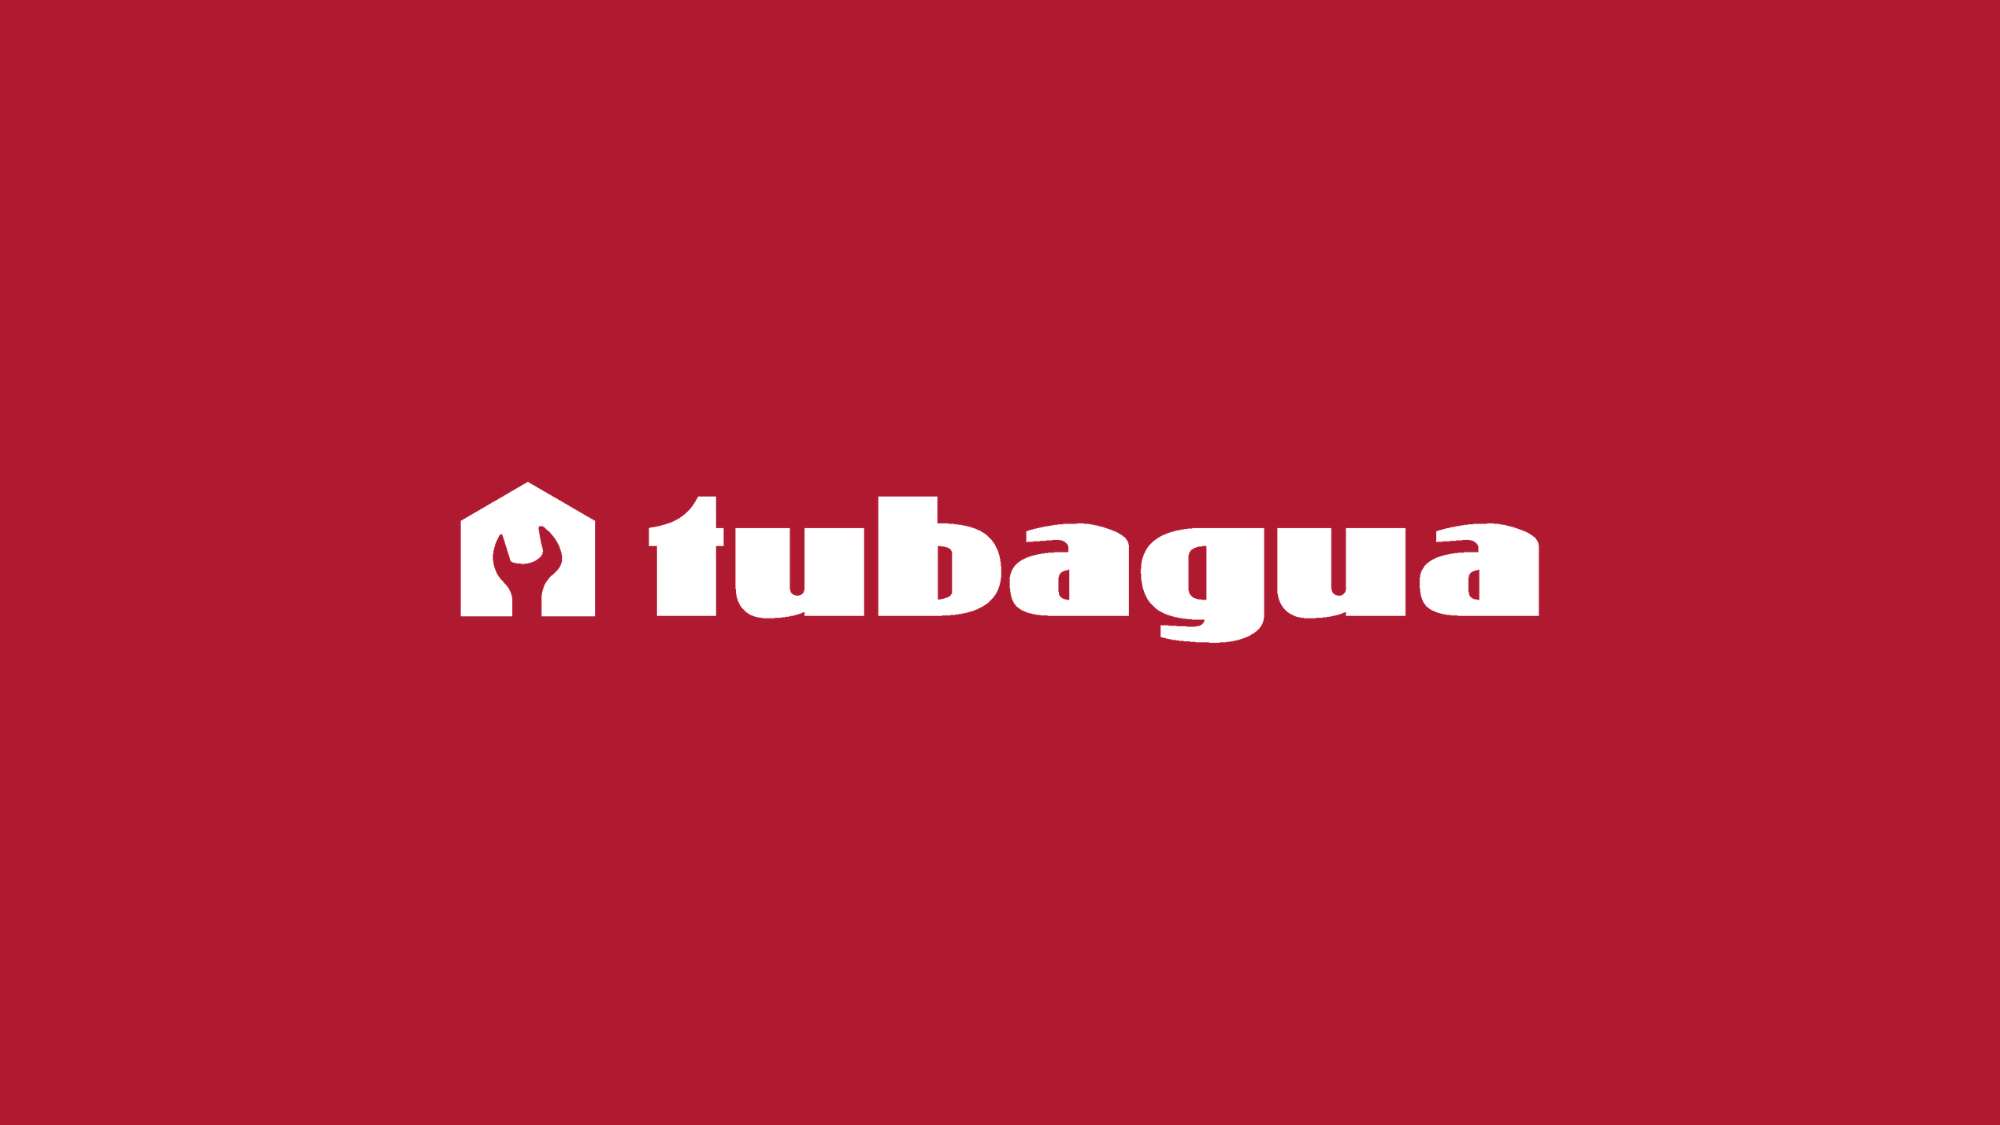 ¡Bienvenido a Tubagua!